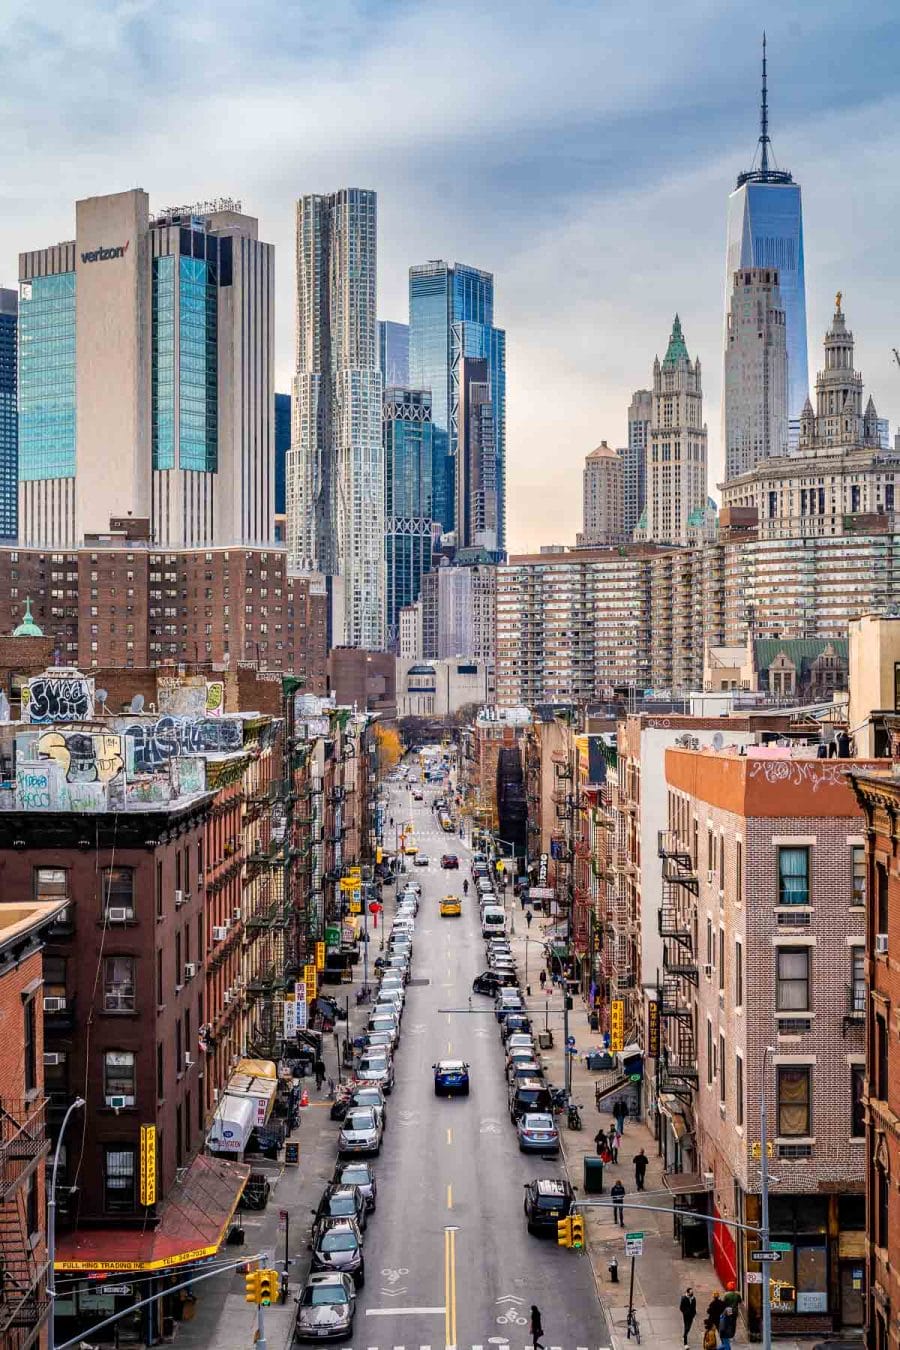 View of Lower Manhattan from the Manhattan Bridge